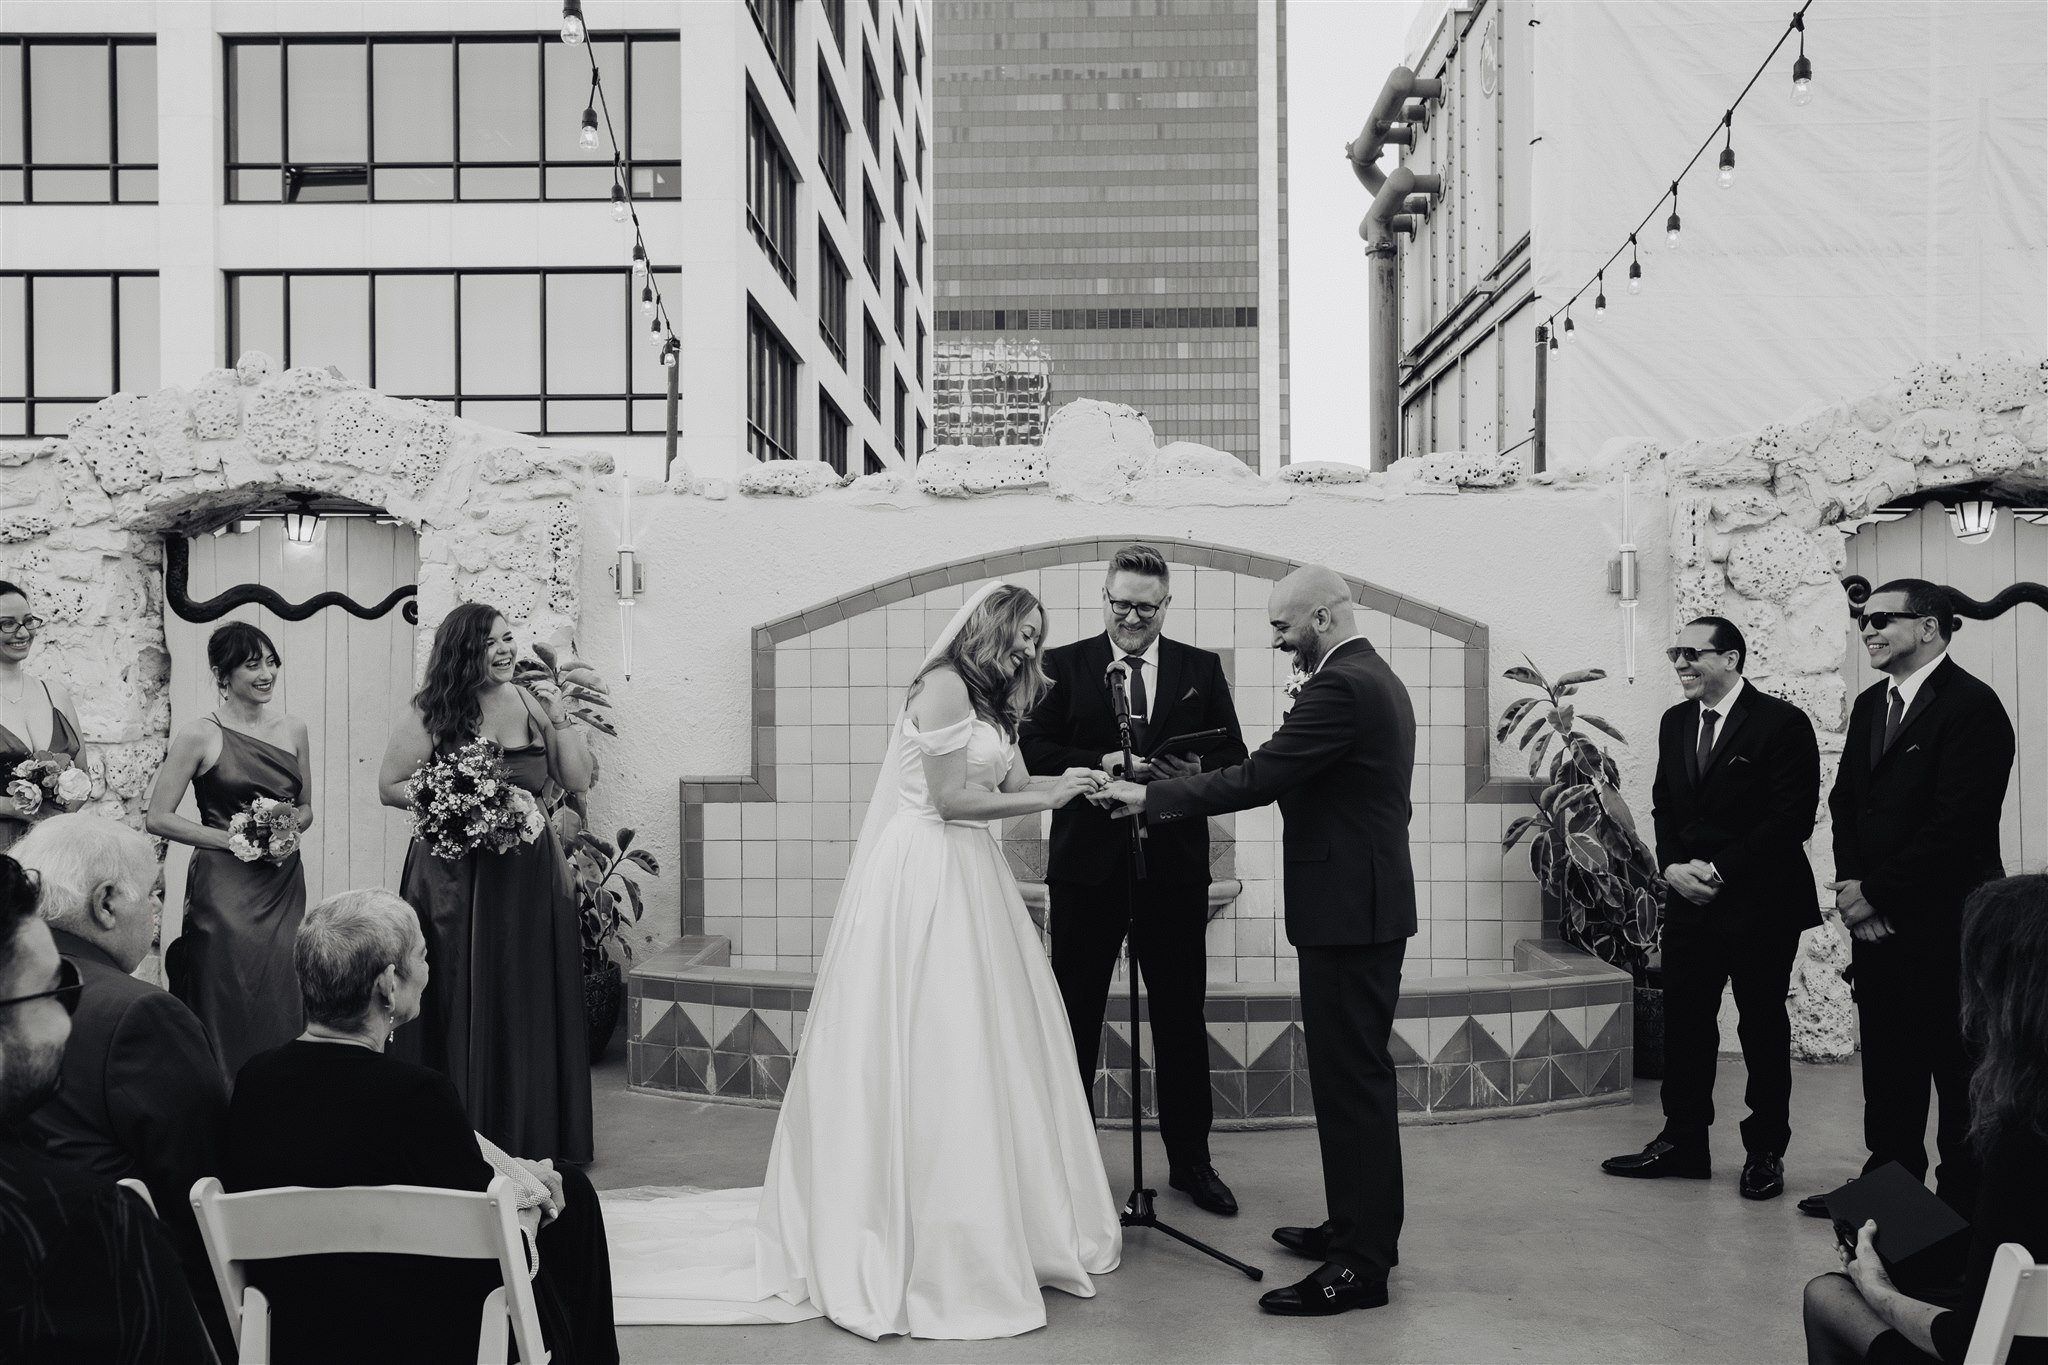 Wedding Ceremony at Oviatt Penthouse taken by Lulan Studio